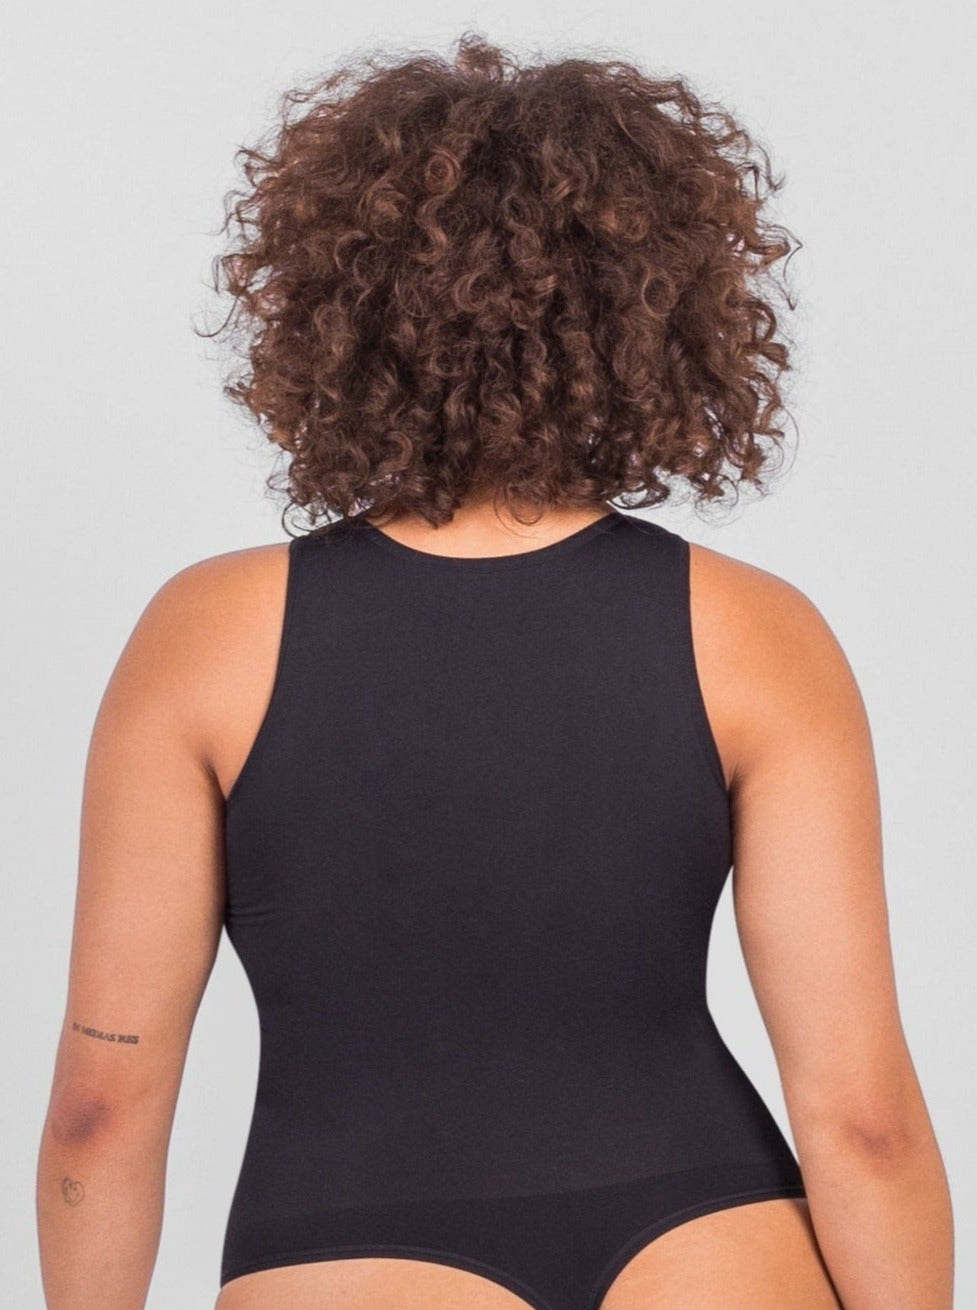 Isabella - Bodysuit String With Open Back Design